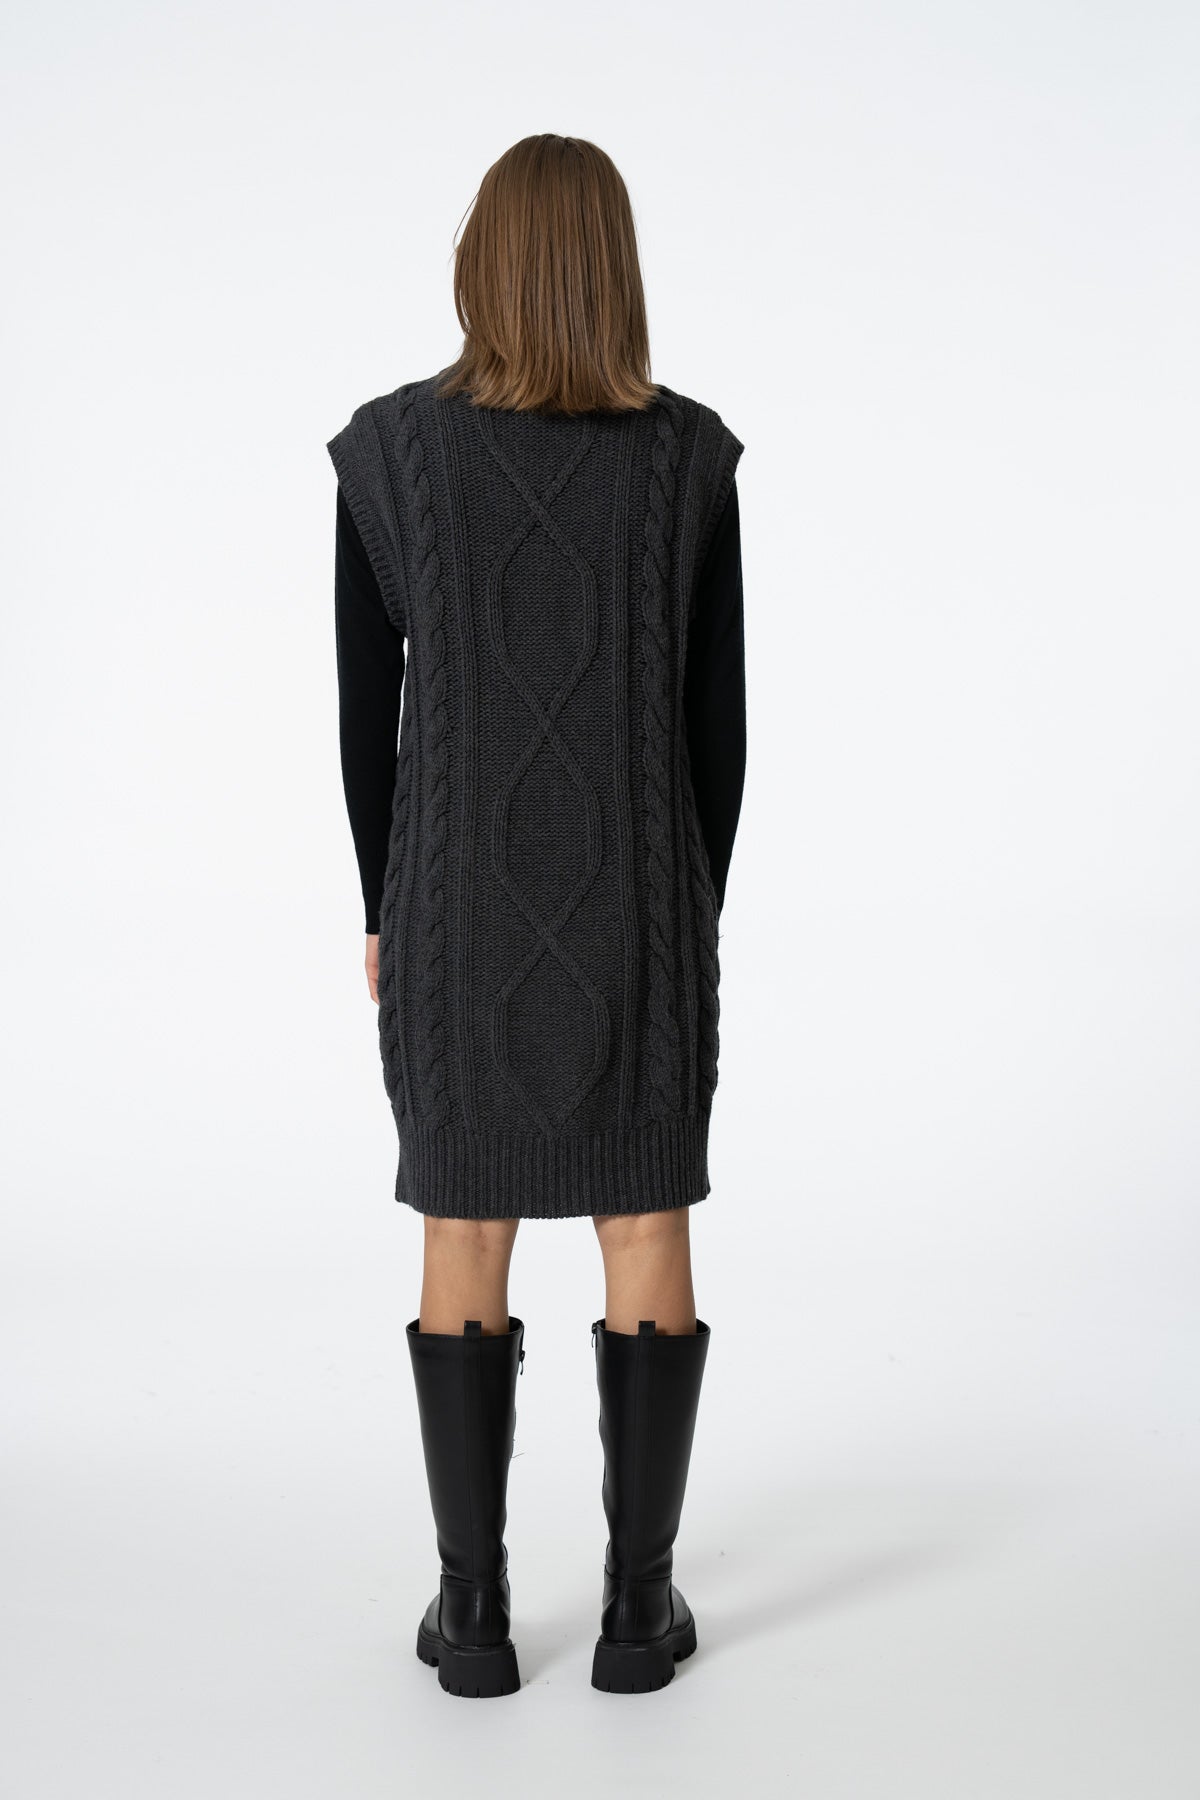 Dinadi Merino Cable Dress in Charcoal Grey Fall 23/24